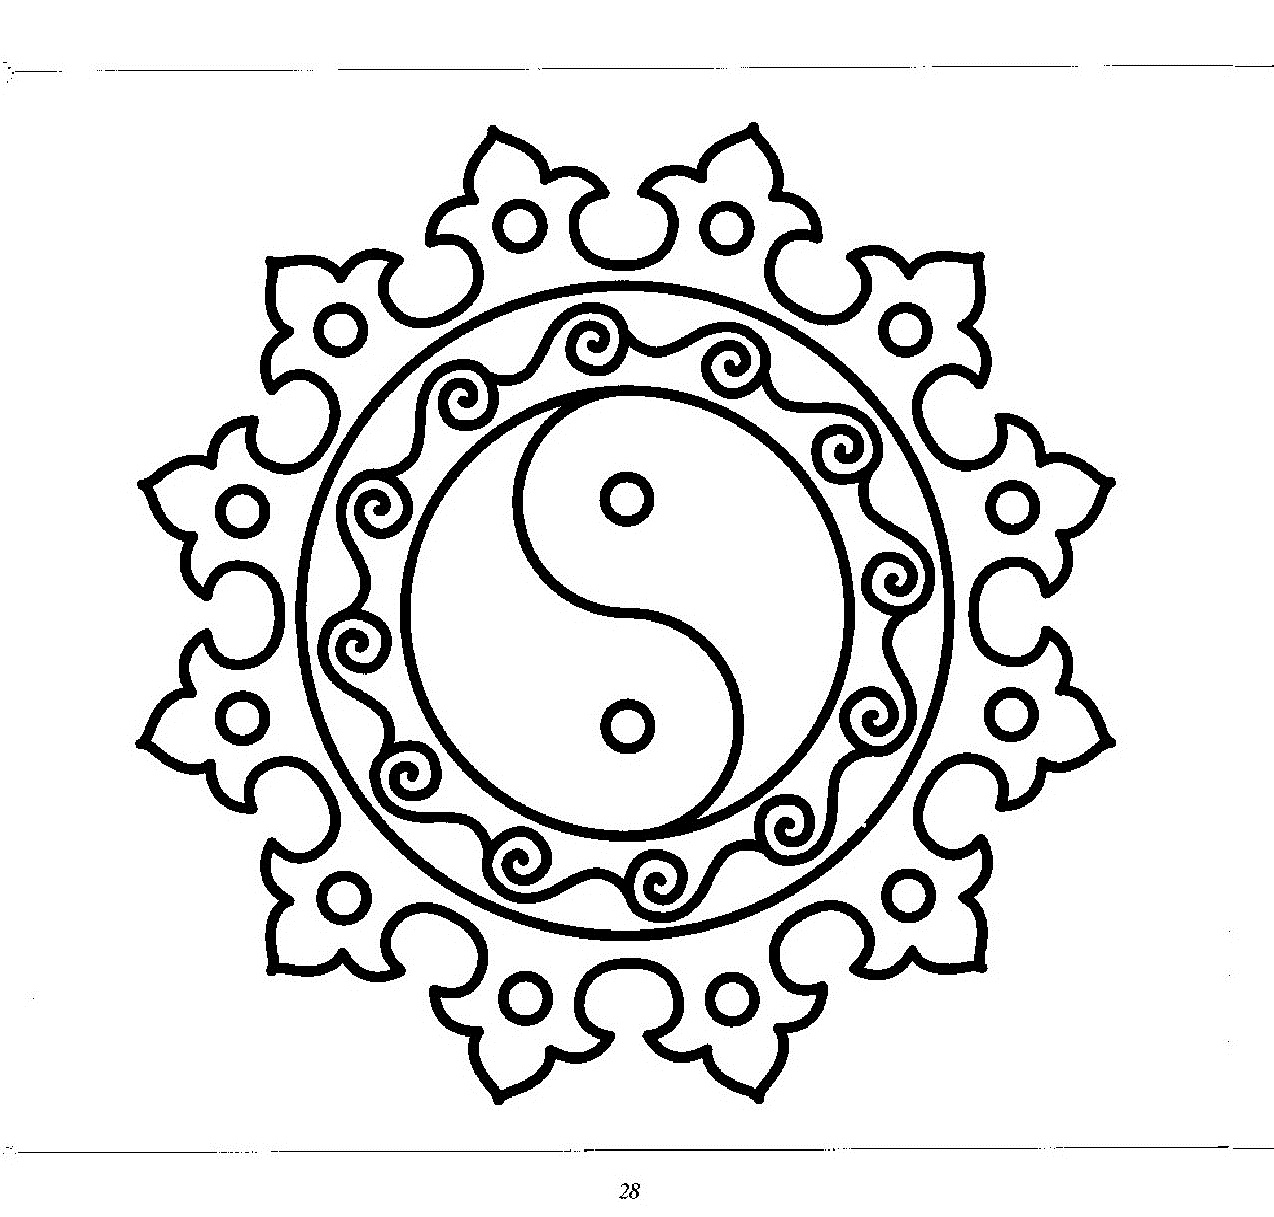 Mandala ablakképek (26).jpg